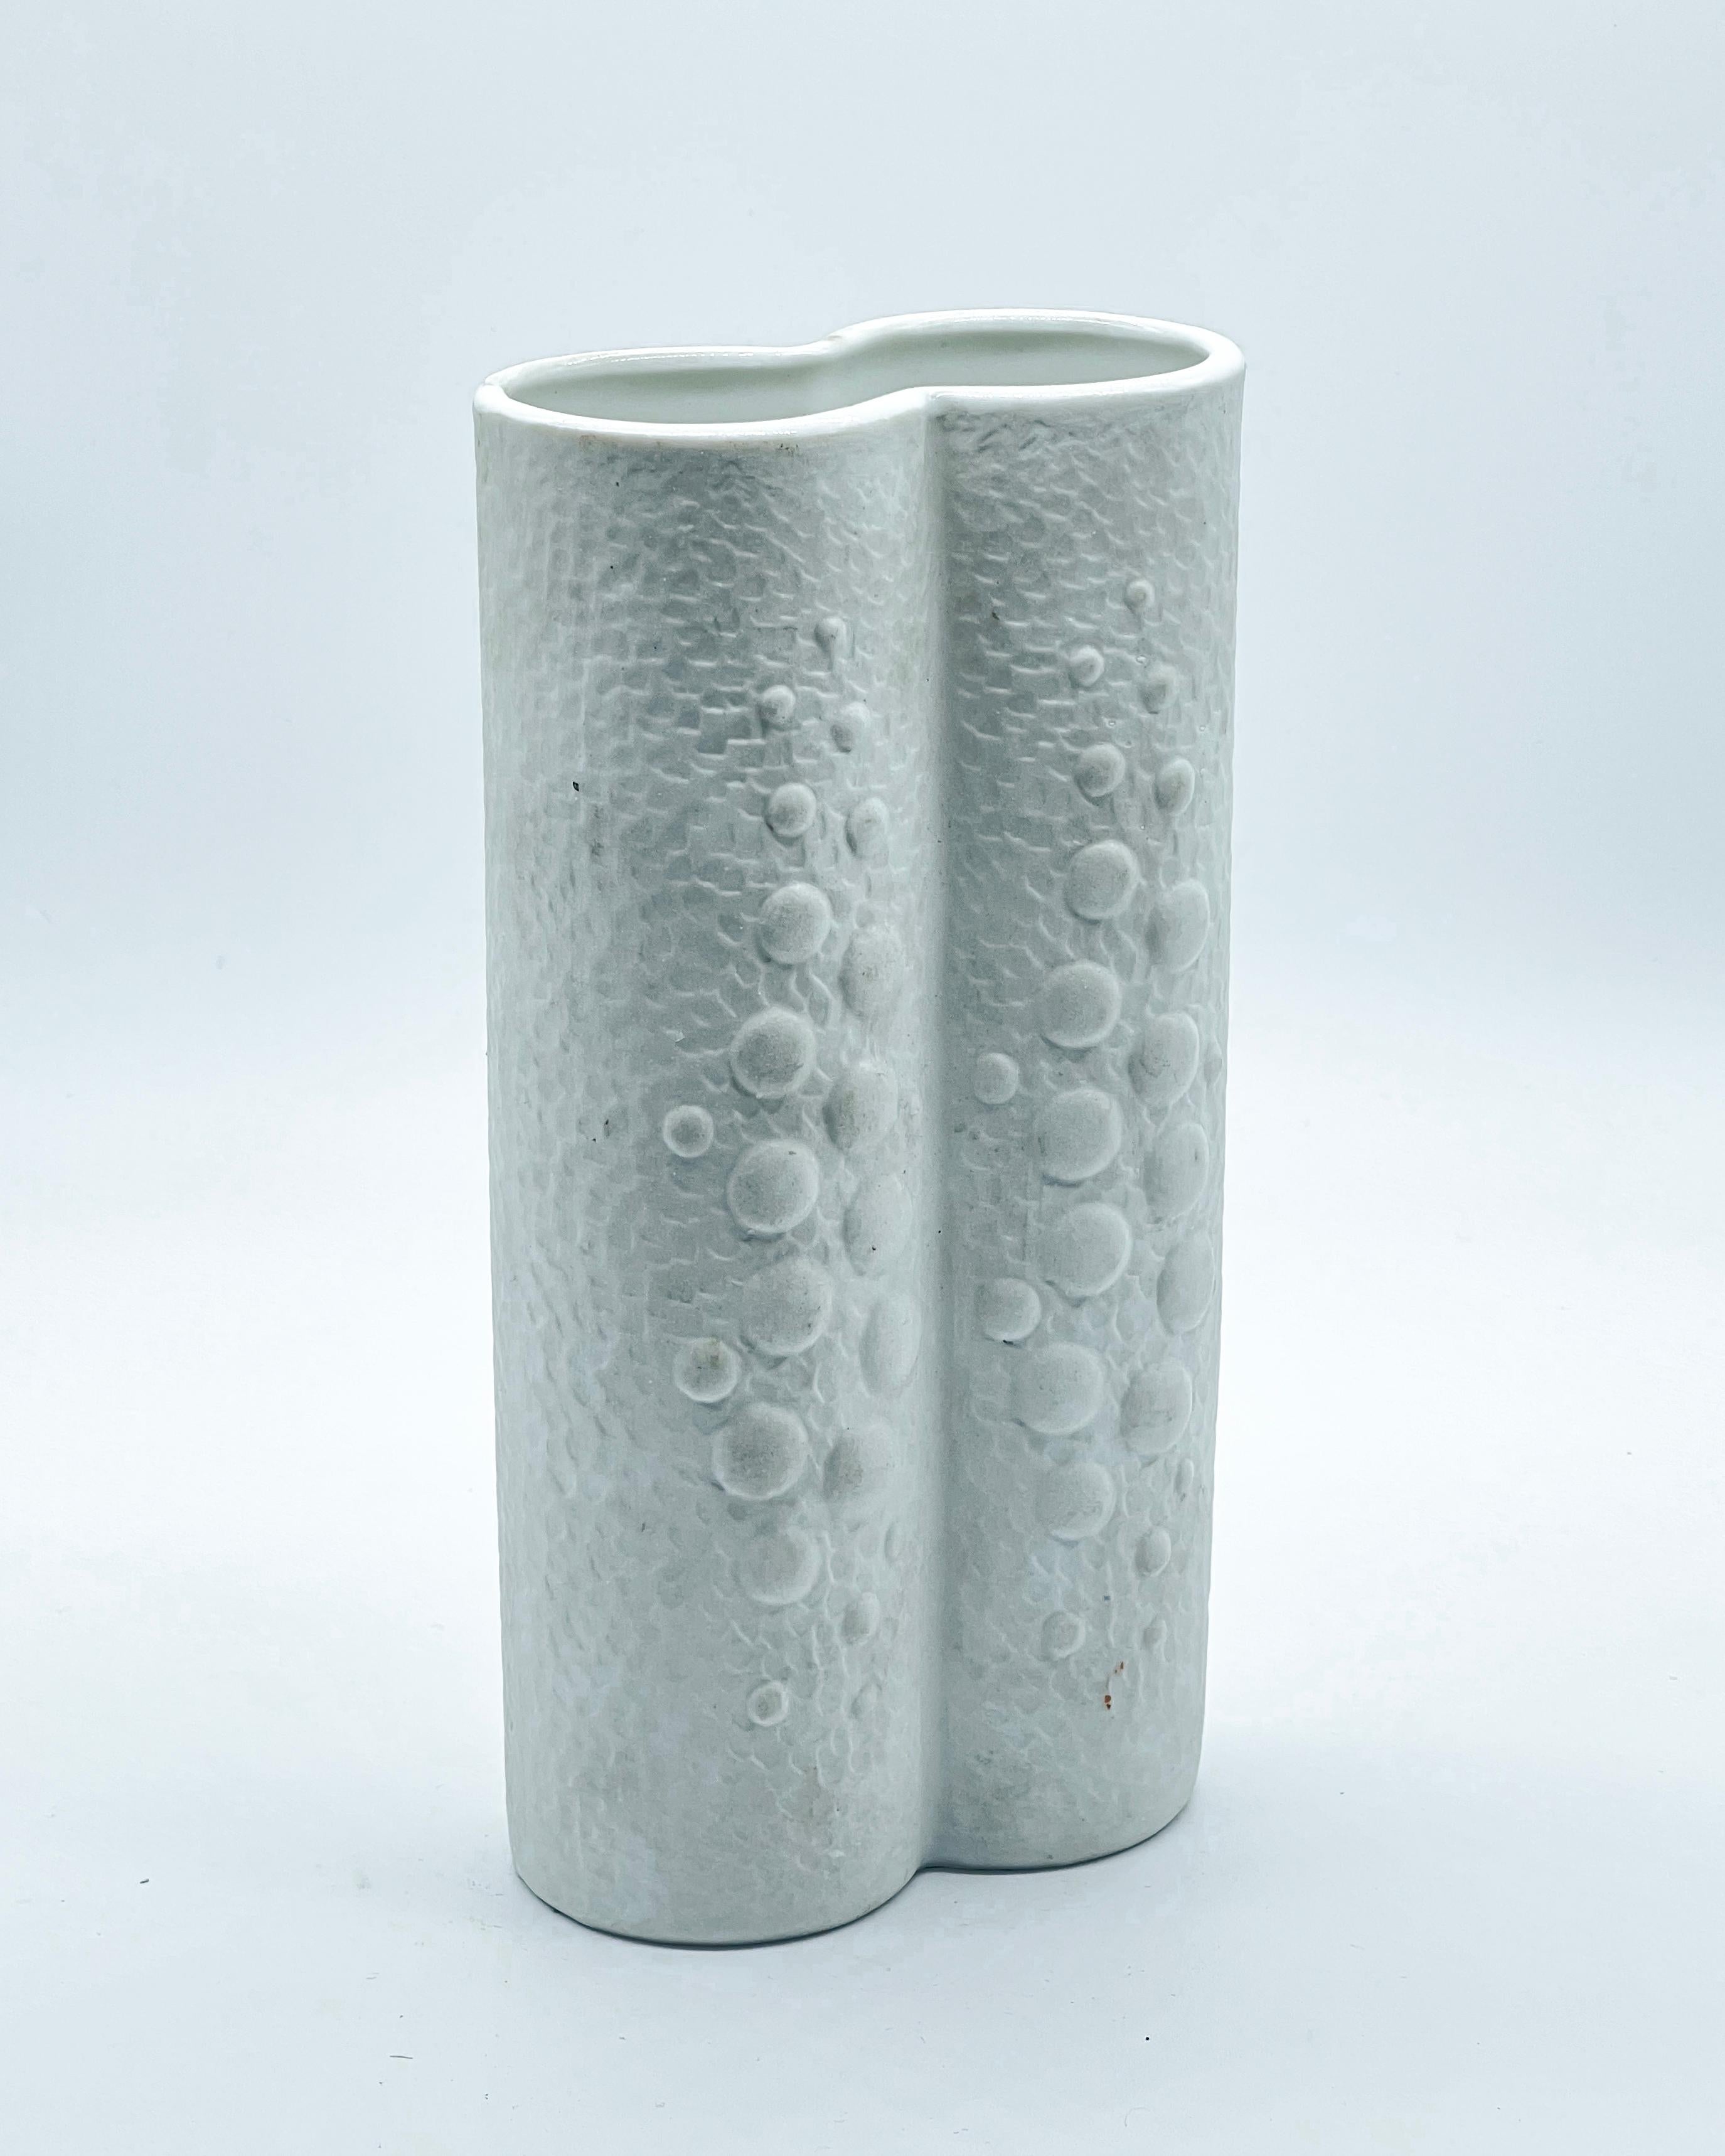 White Porcelain Vase - Fine Ceramic Vase - Decorative Handmade Vase

Nice vintage vase in white porcelain, hand-made and signed 